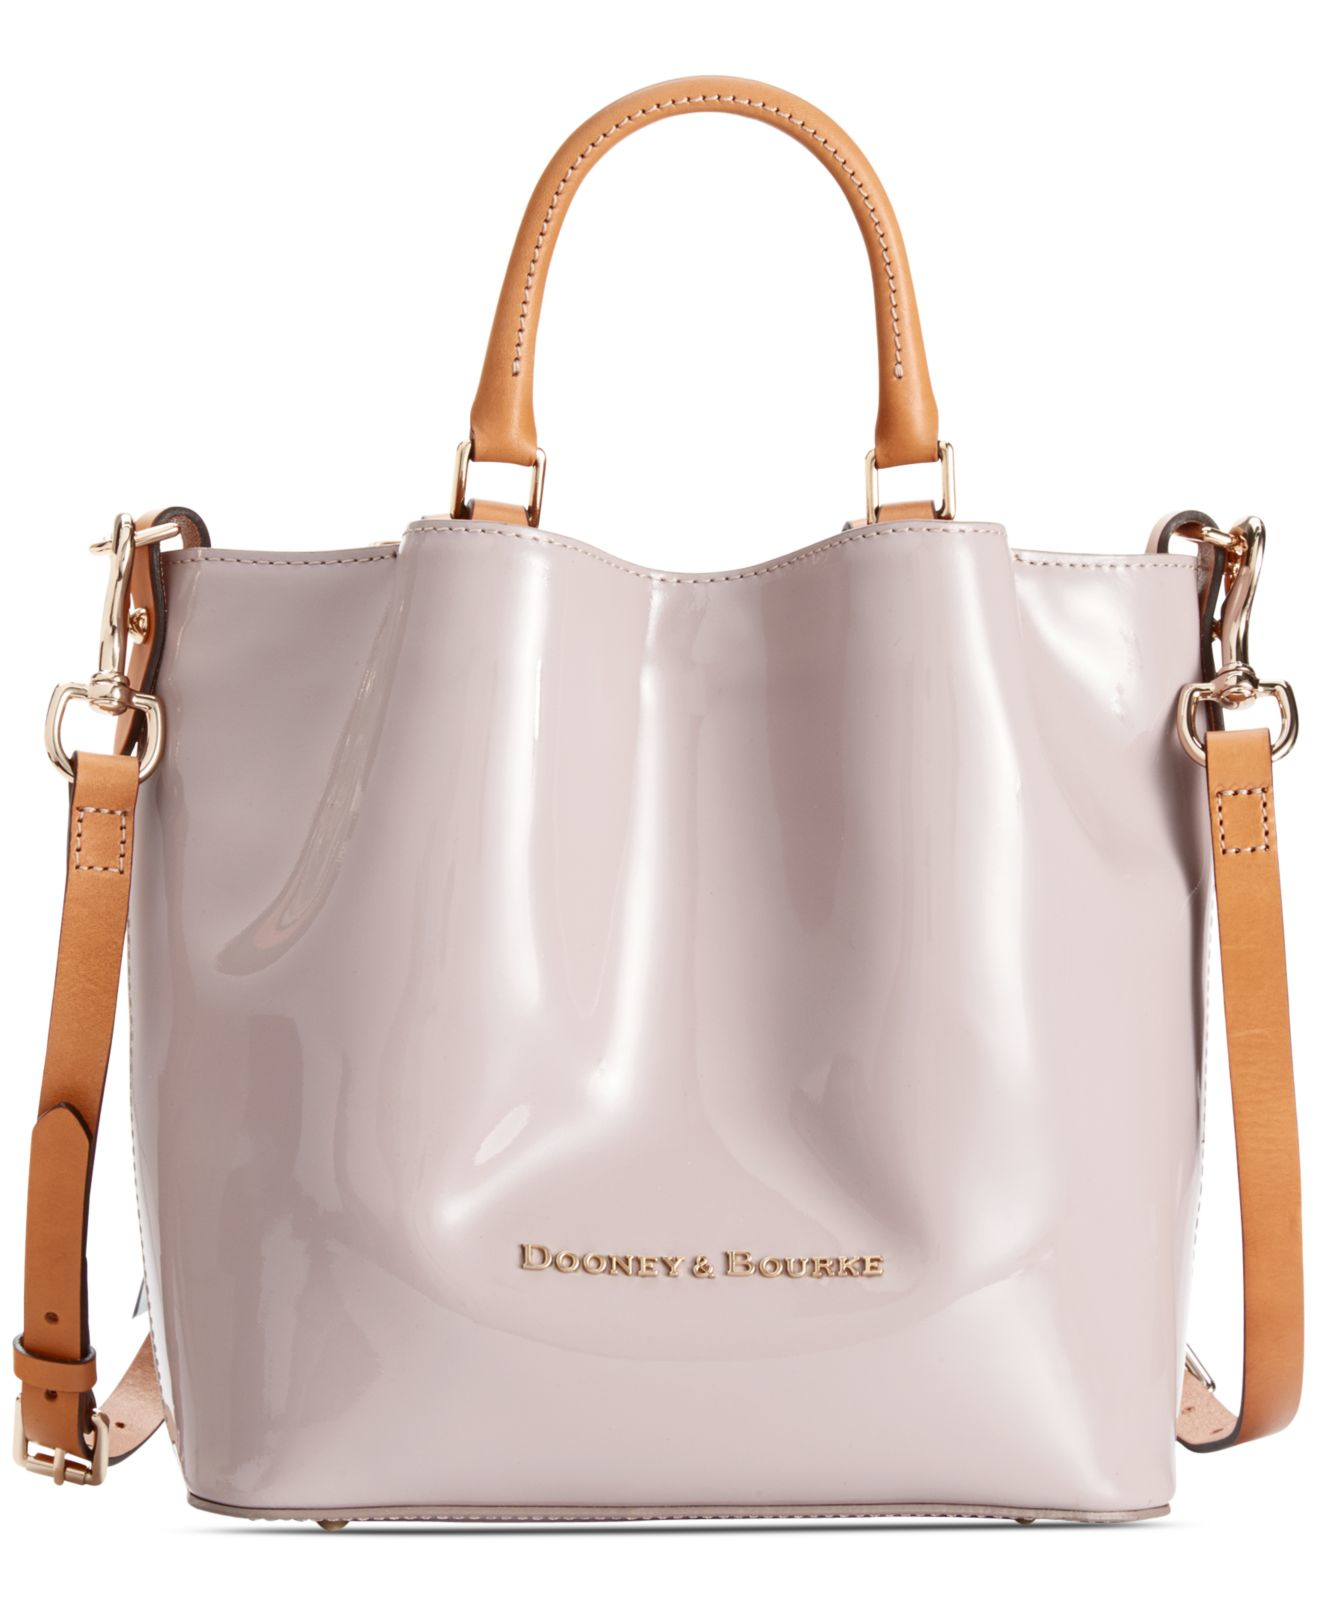 Dooney & Bourke Patent Leather handbag - recoveryparade-japan.com